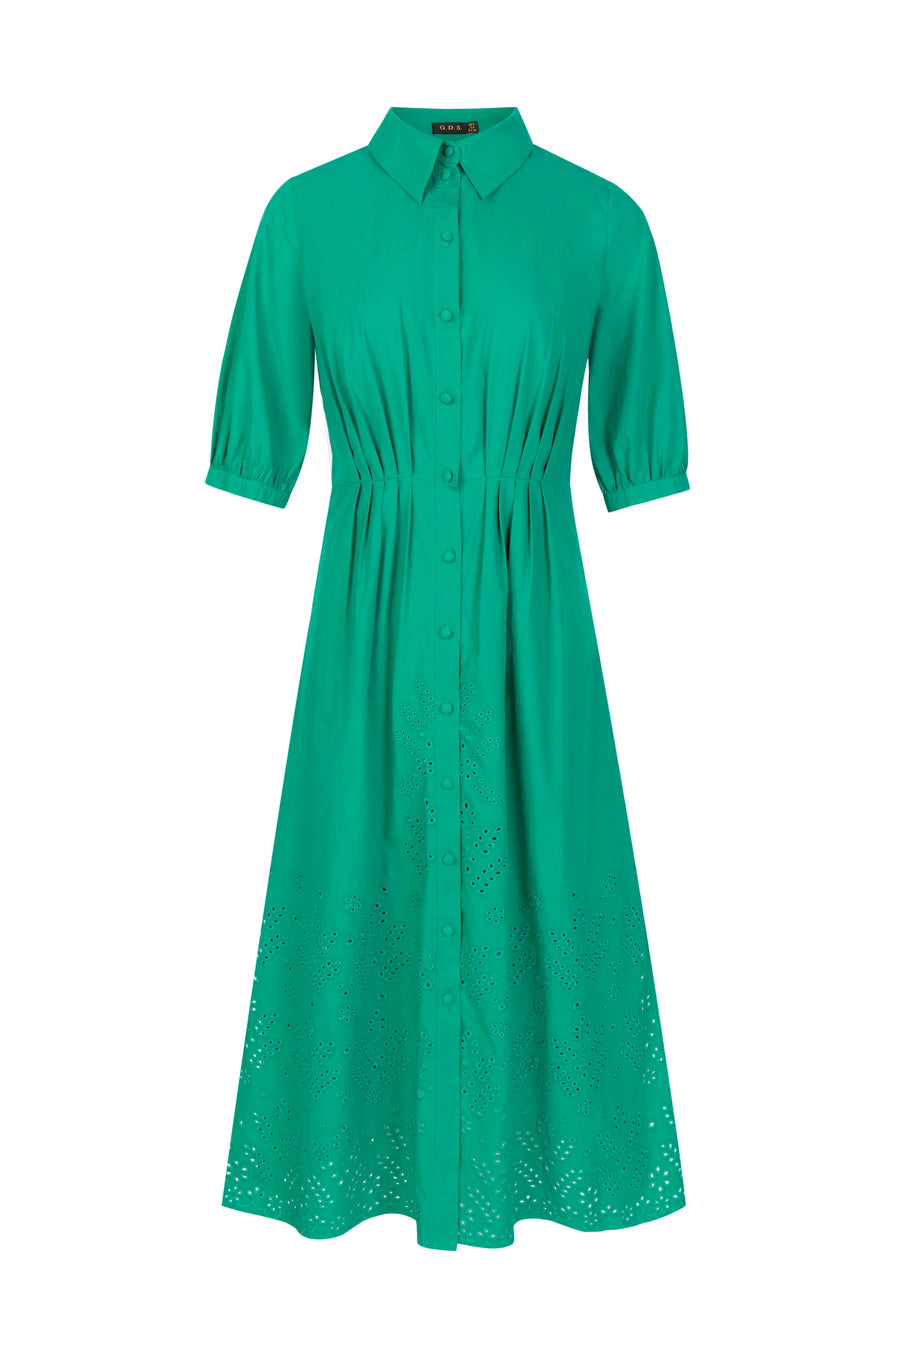 GDS Raven Tencel Long Dress | Sea Green DRESSES 10 12 14 16 8 GDS GREEN L M S XL XS